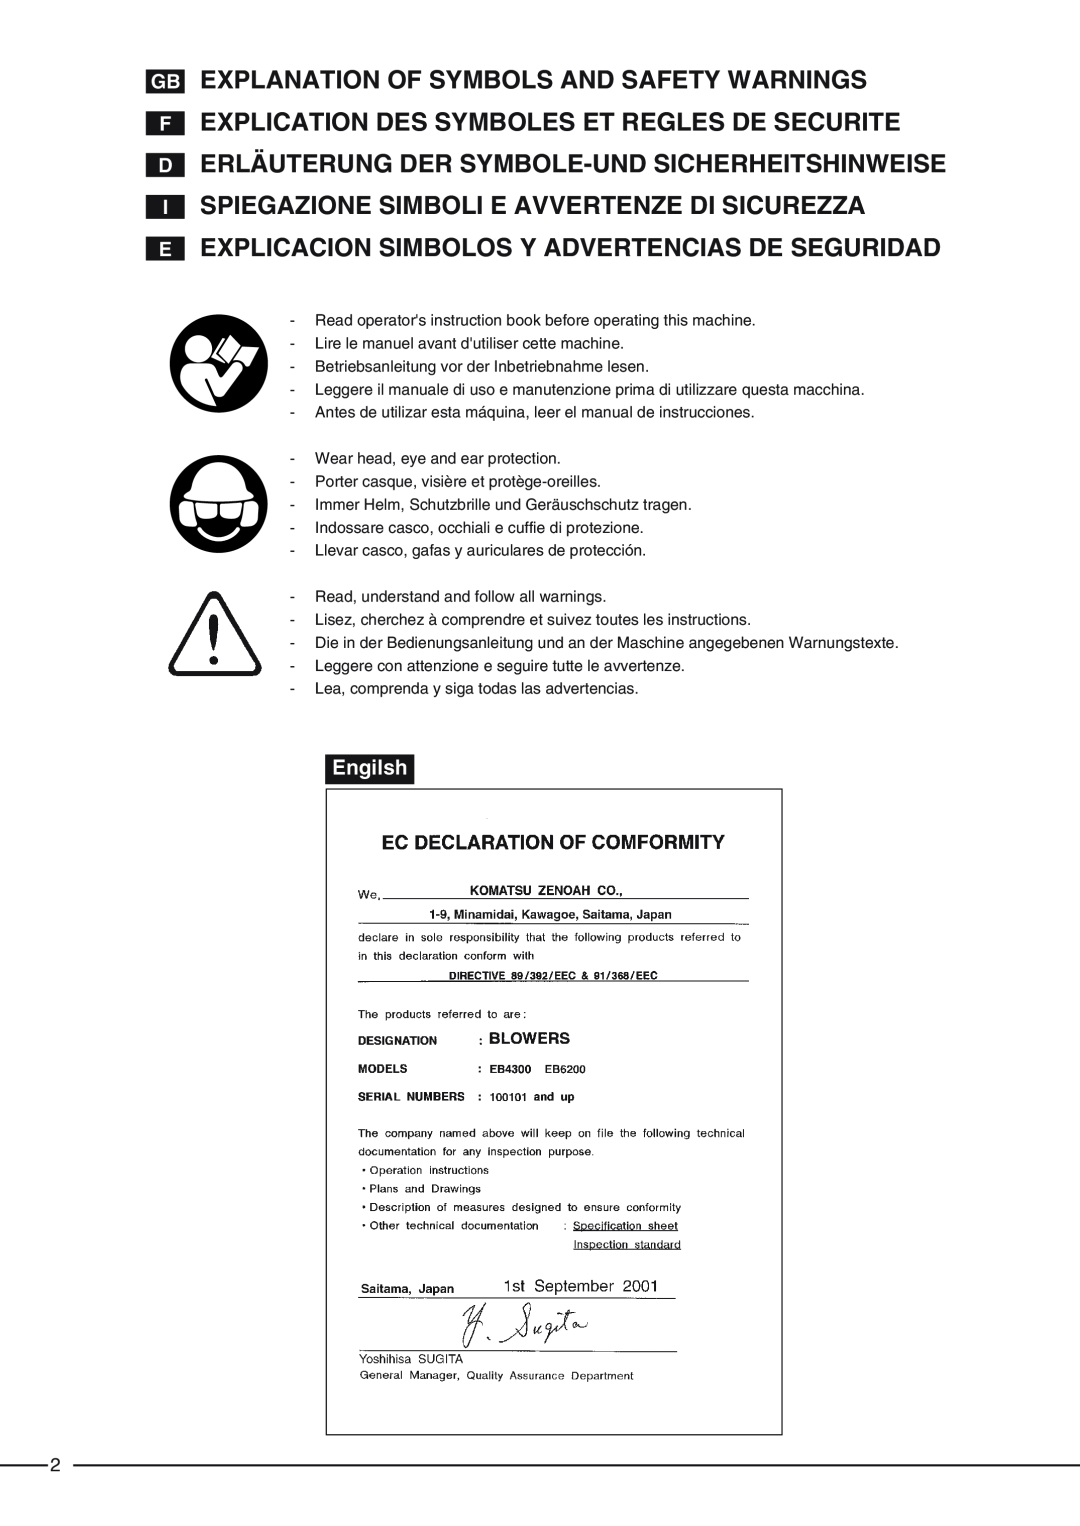 Zenoah EB6200 Gb Explanation Of Symbols And Safety Warnings, Fexplication Des Symboles Et Regles De Securite, Engilsh 